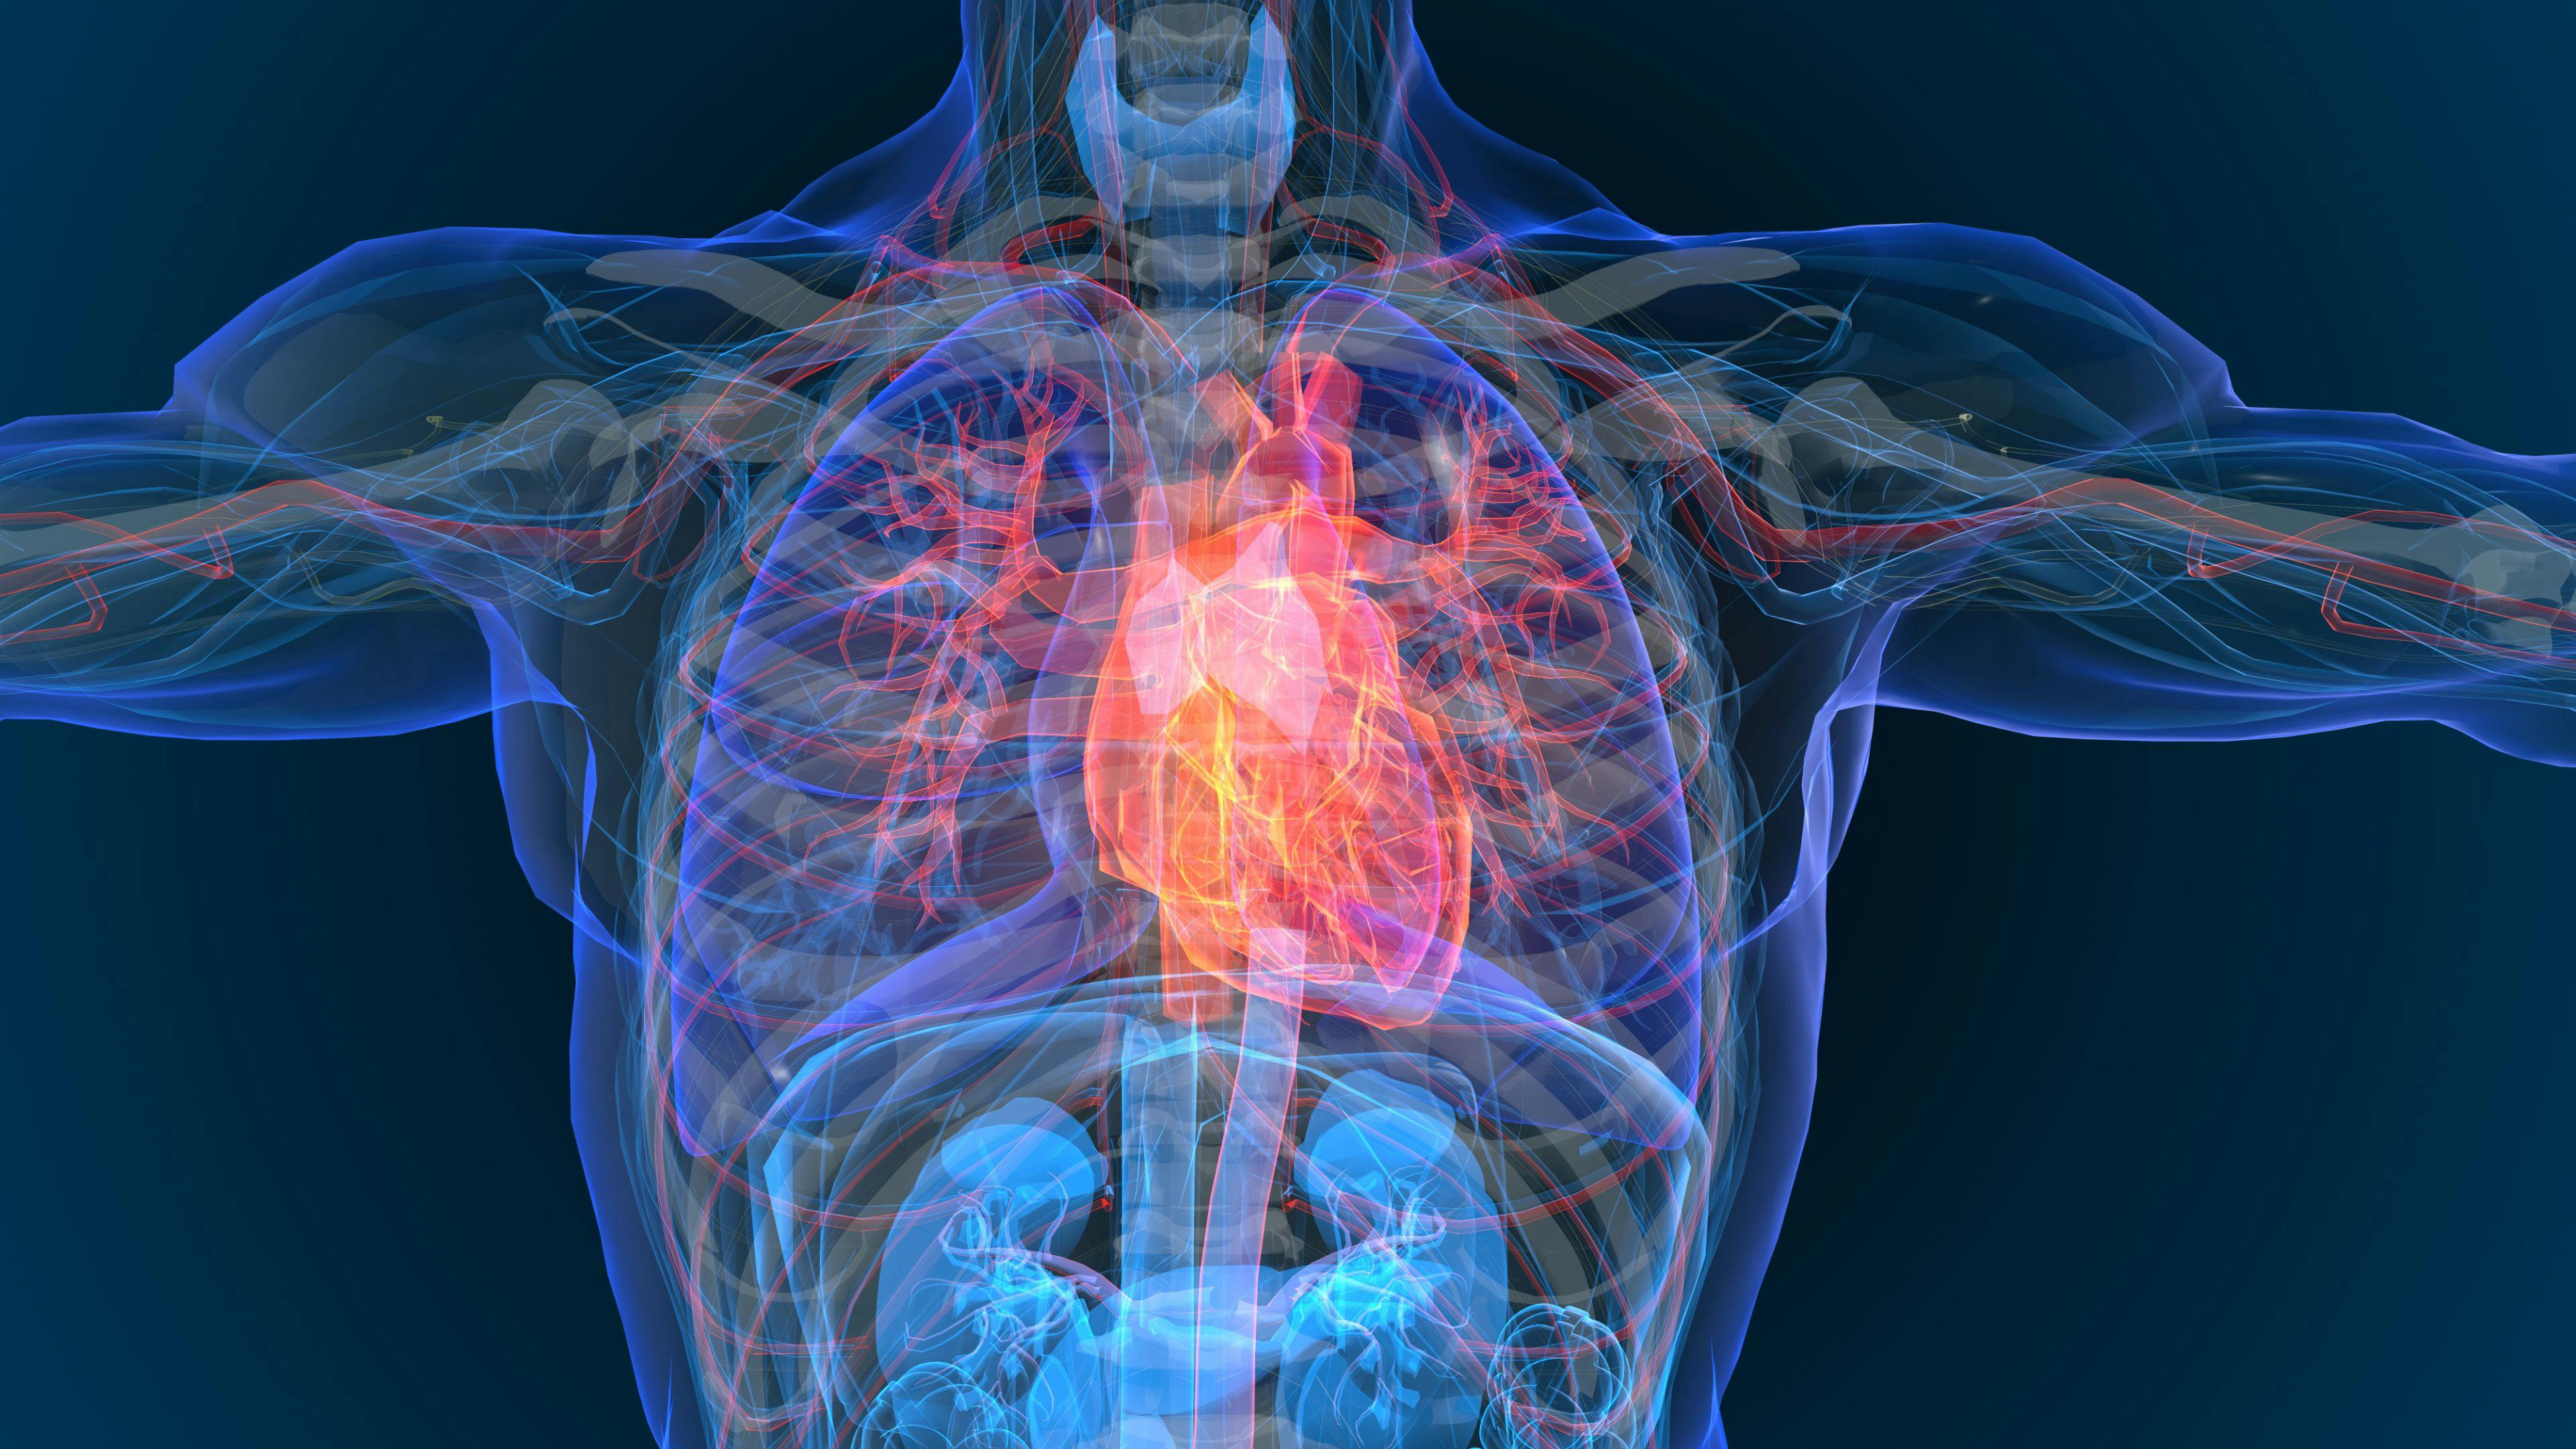 3d rendered illustration of heart attack and heart disease 3D illustration: © appledesign - stock.adobe.com


